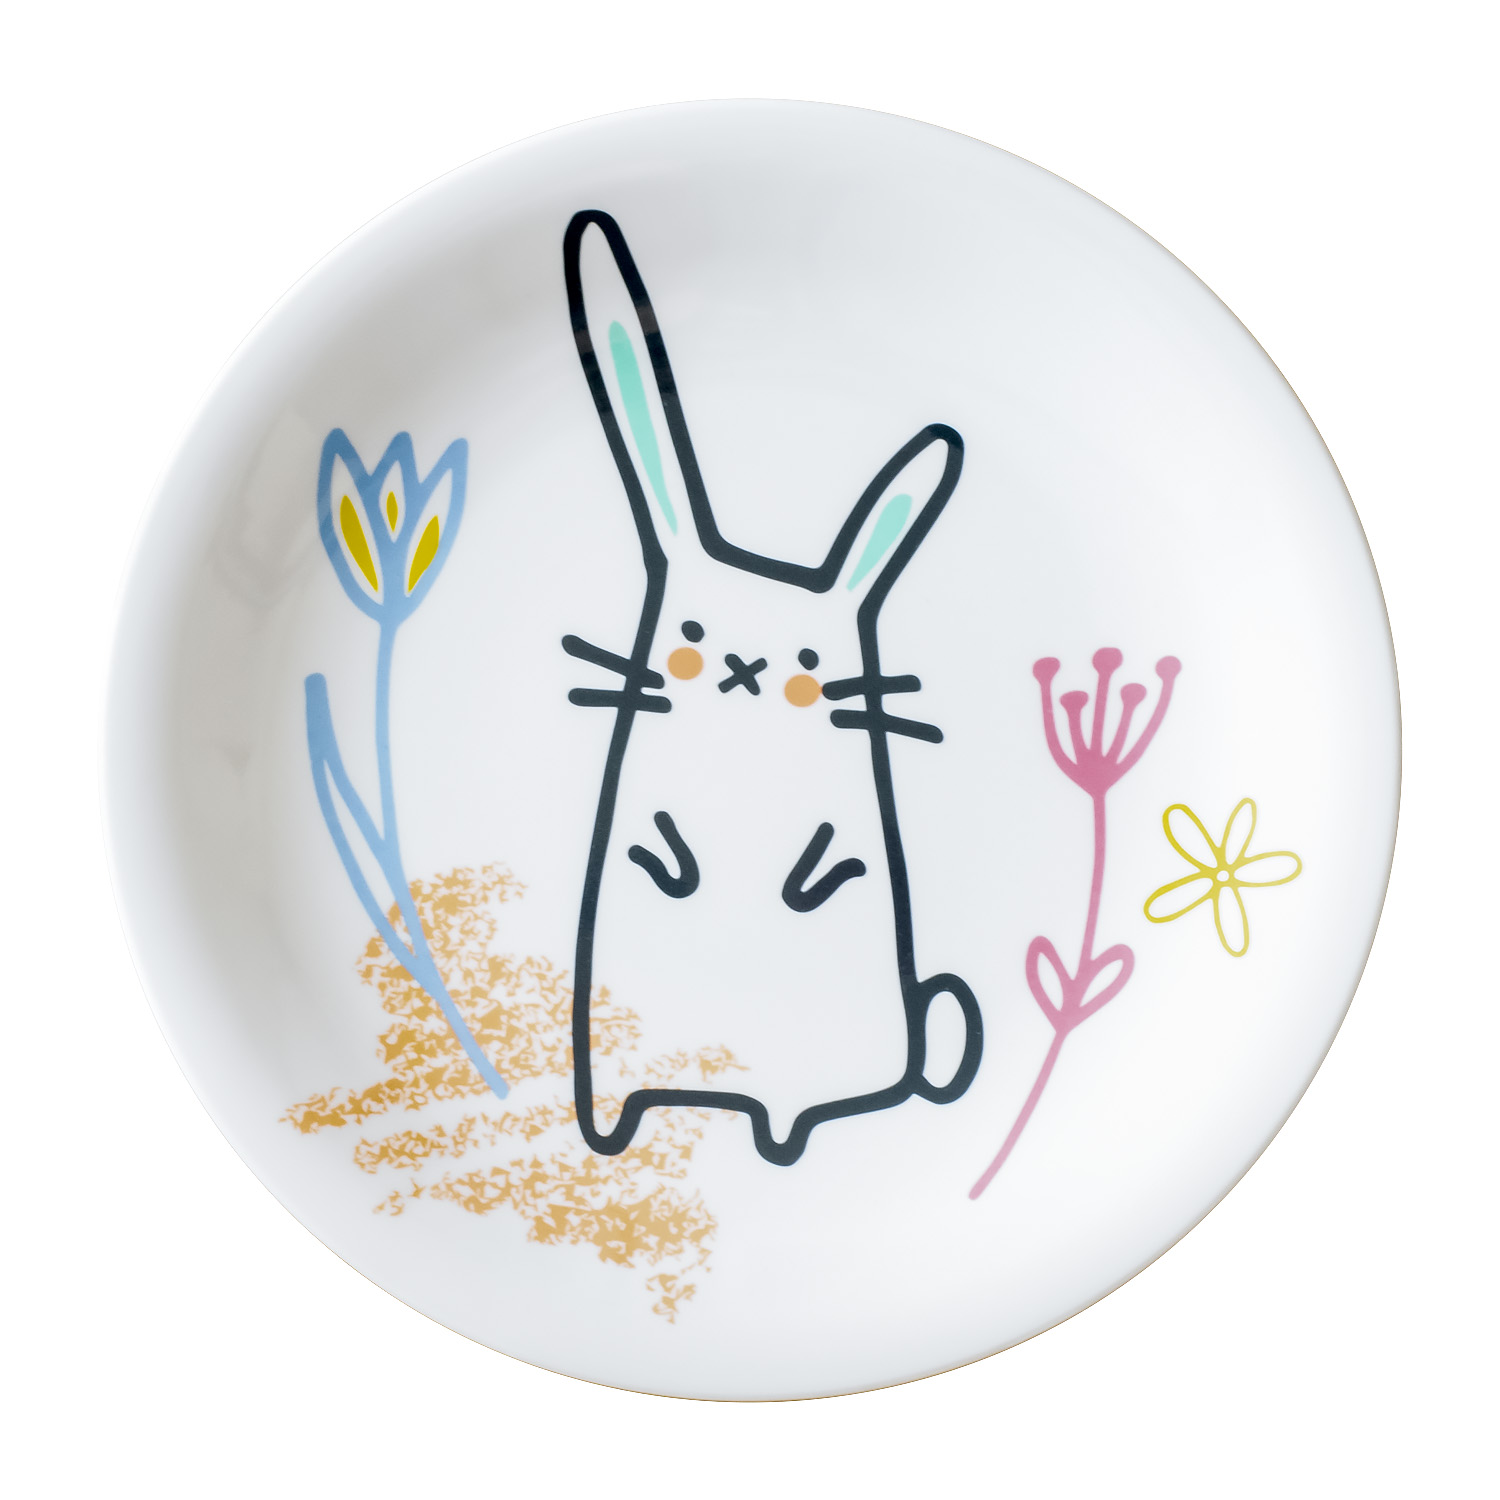 Mainstays Bunny Sketch Mix and Match Melamine Salad Plate Set, 4 Piece - image 3 of 5